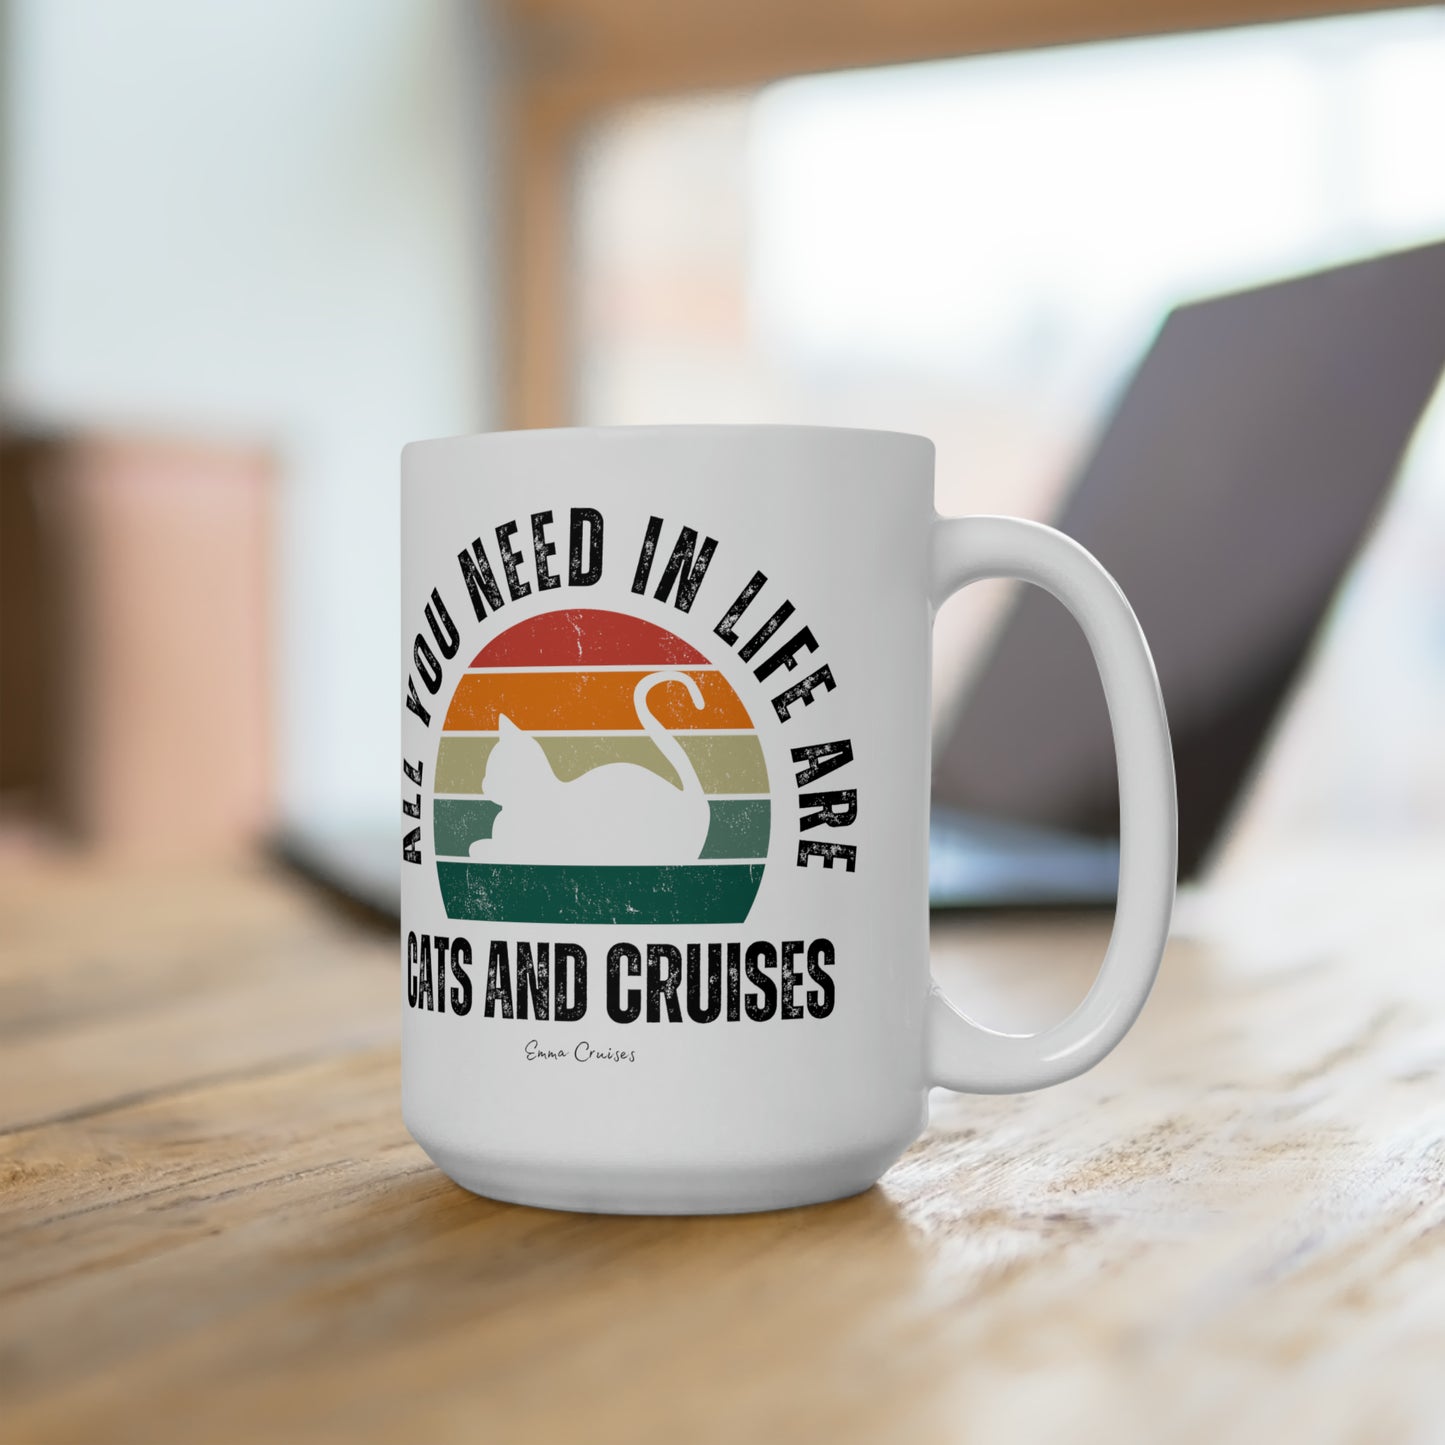 Cats and Cruises - Ceramic Mug